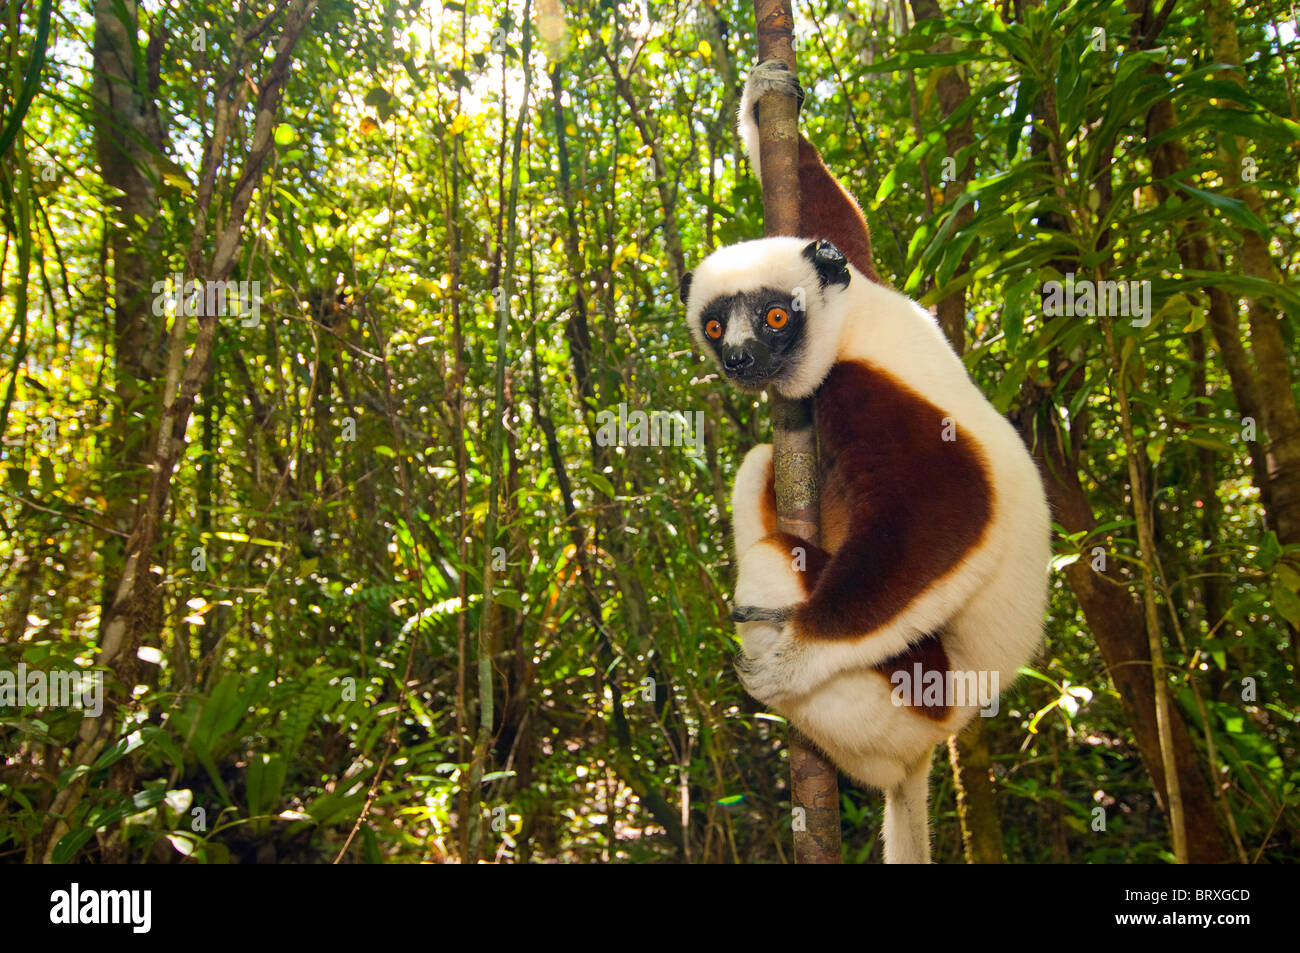 Lemur wildlife Propithecus verreauxi cocquereli Sifaka Madagascar Madagascar lemur bosque salvaje selva prosimian árbol Foto de stock